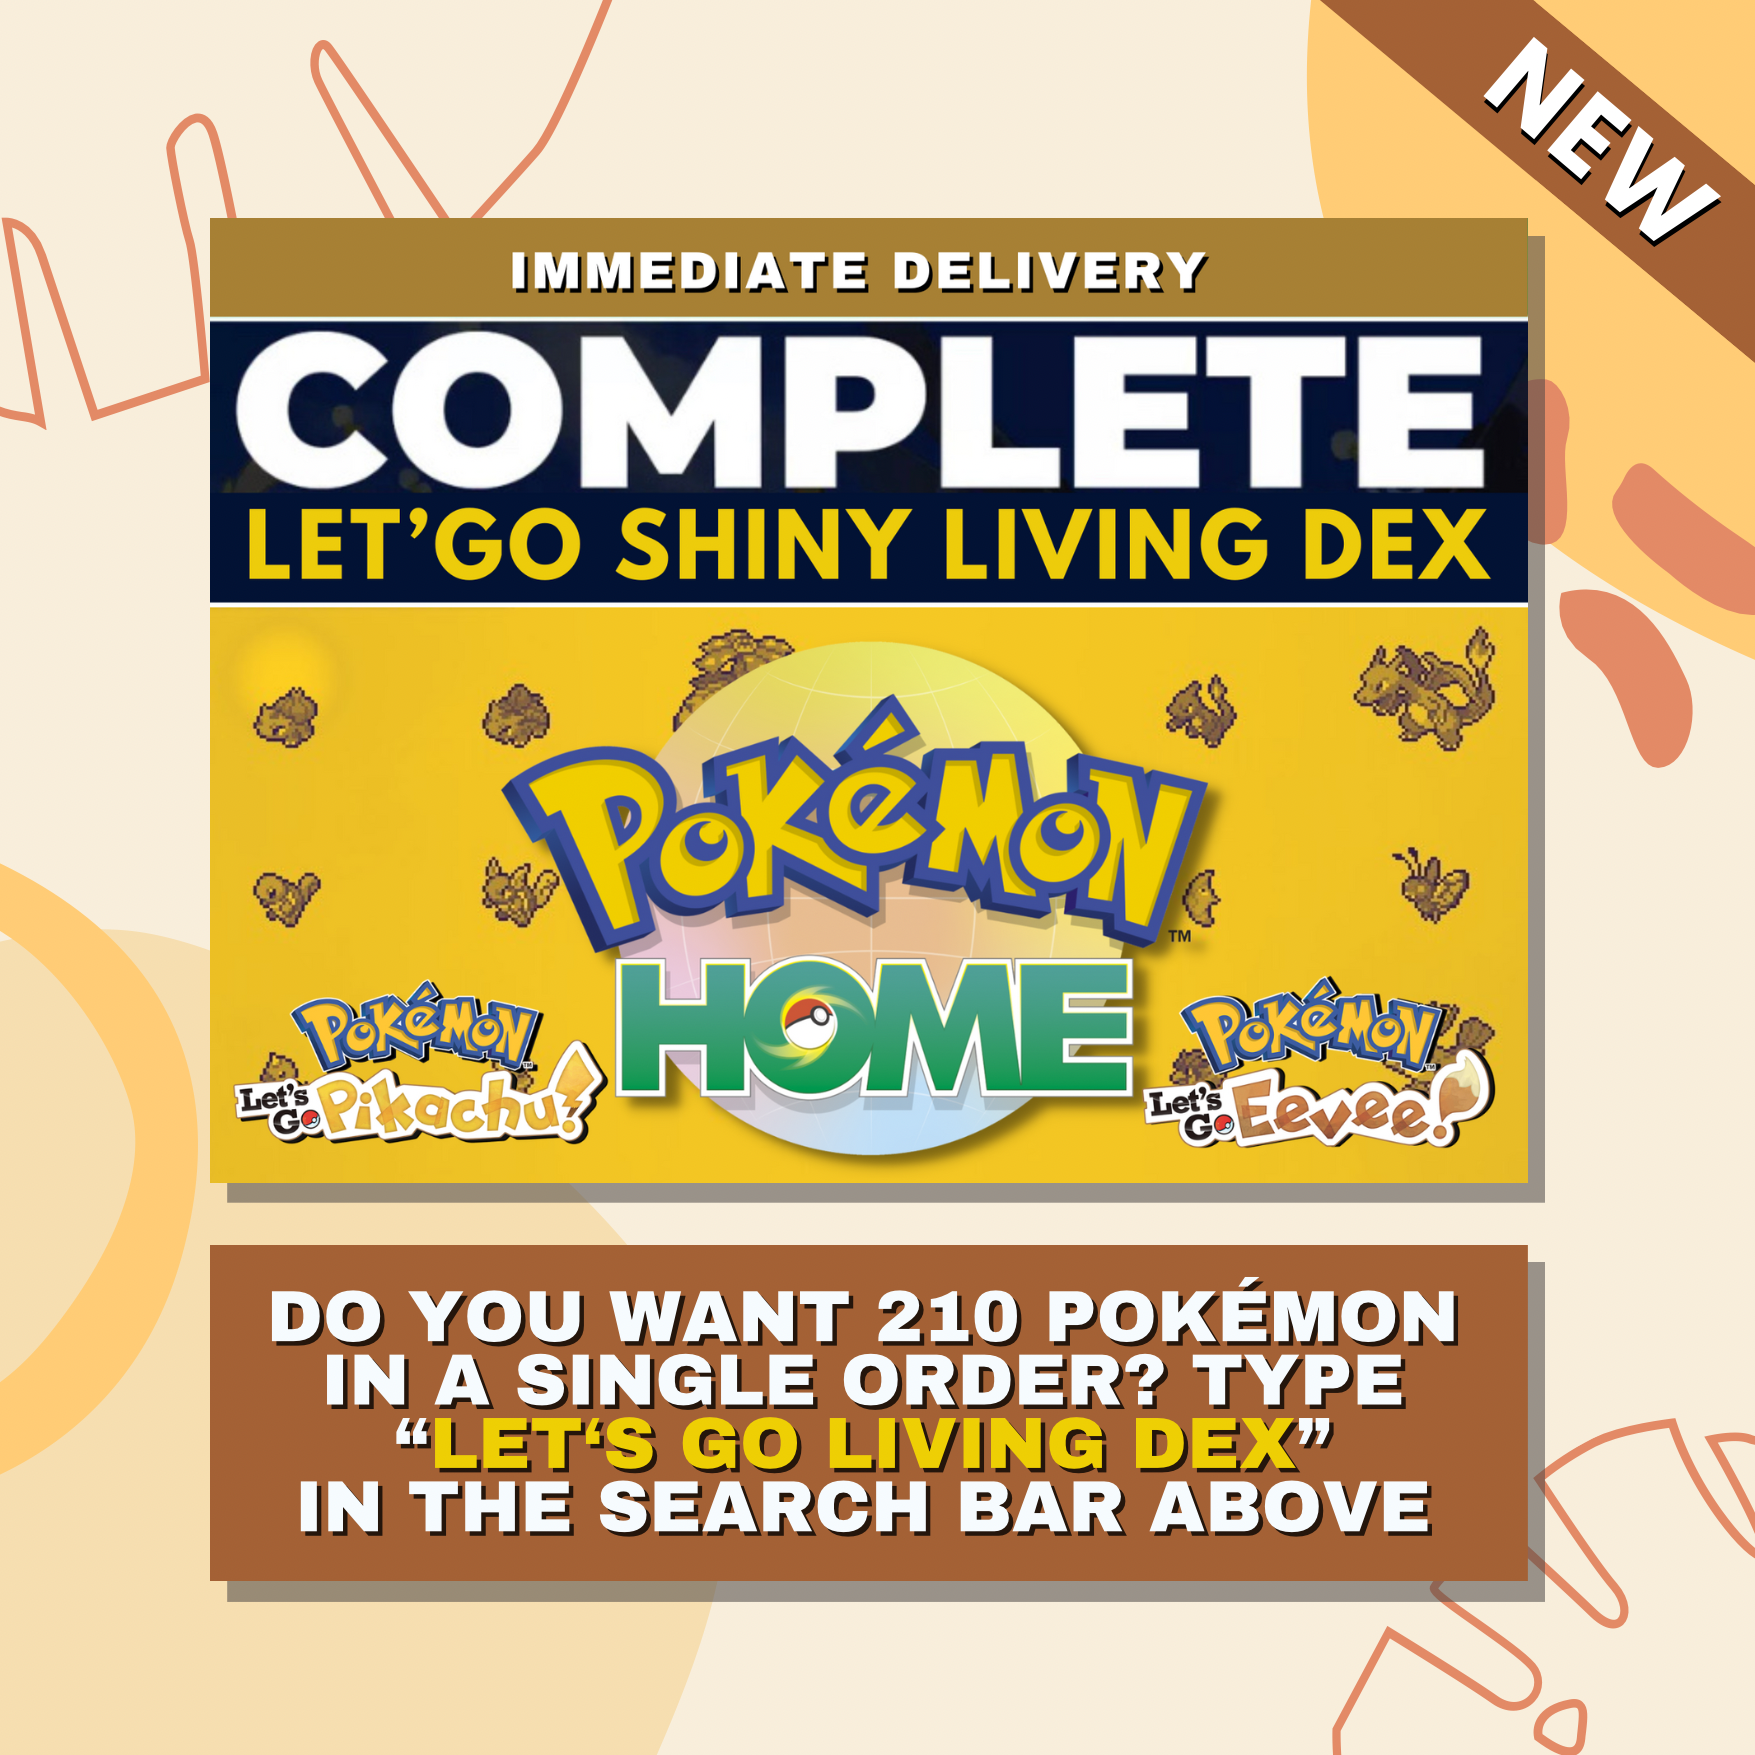 Nidoqueen Shiny ✨ or Non Shiny Pokémon Let's Go Pikachu Eevee Level 100 Competitive Battle Ready 6 IV 100% Legit Legal Customizable Custom OT by Shiny Living Dex | Shiny Living Dex